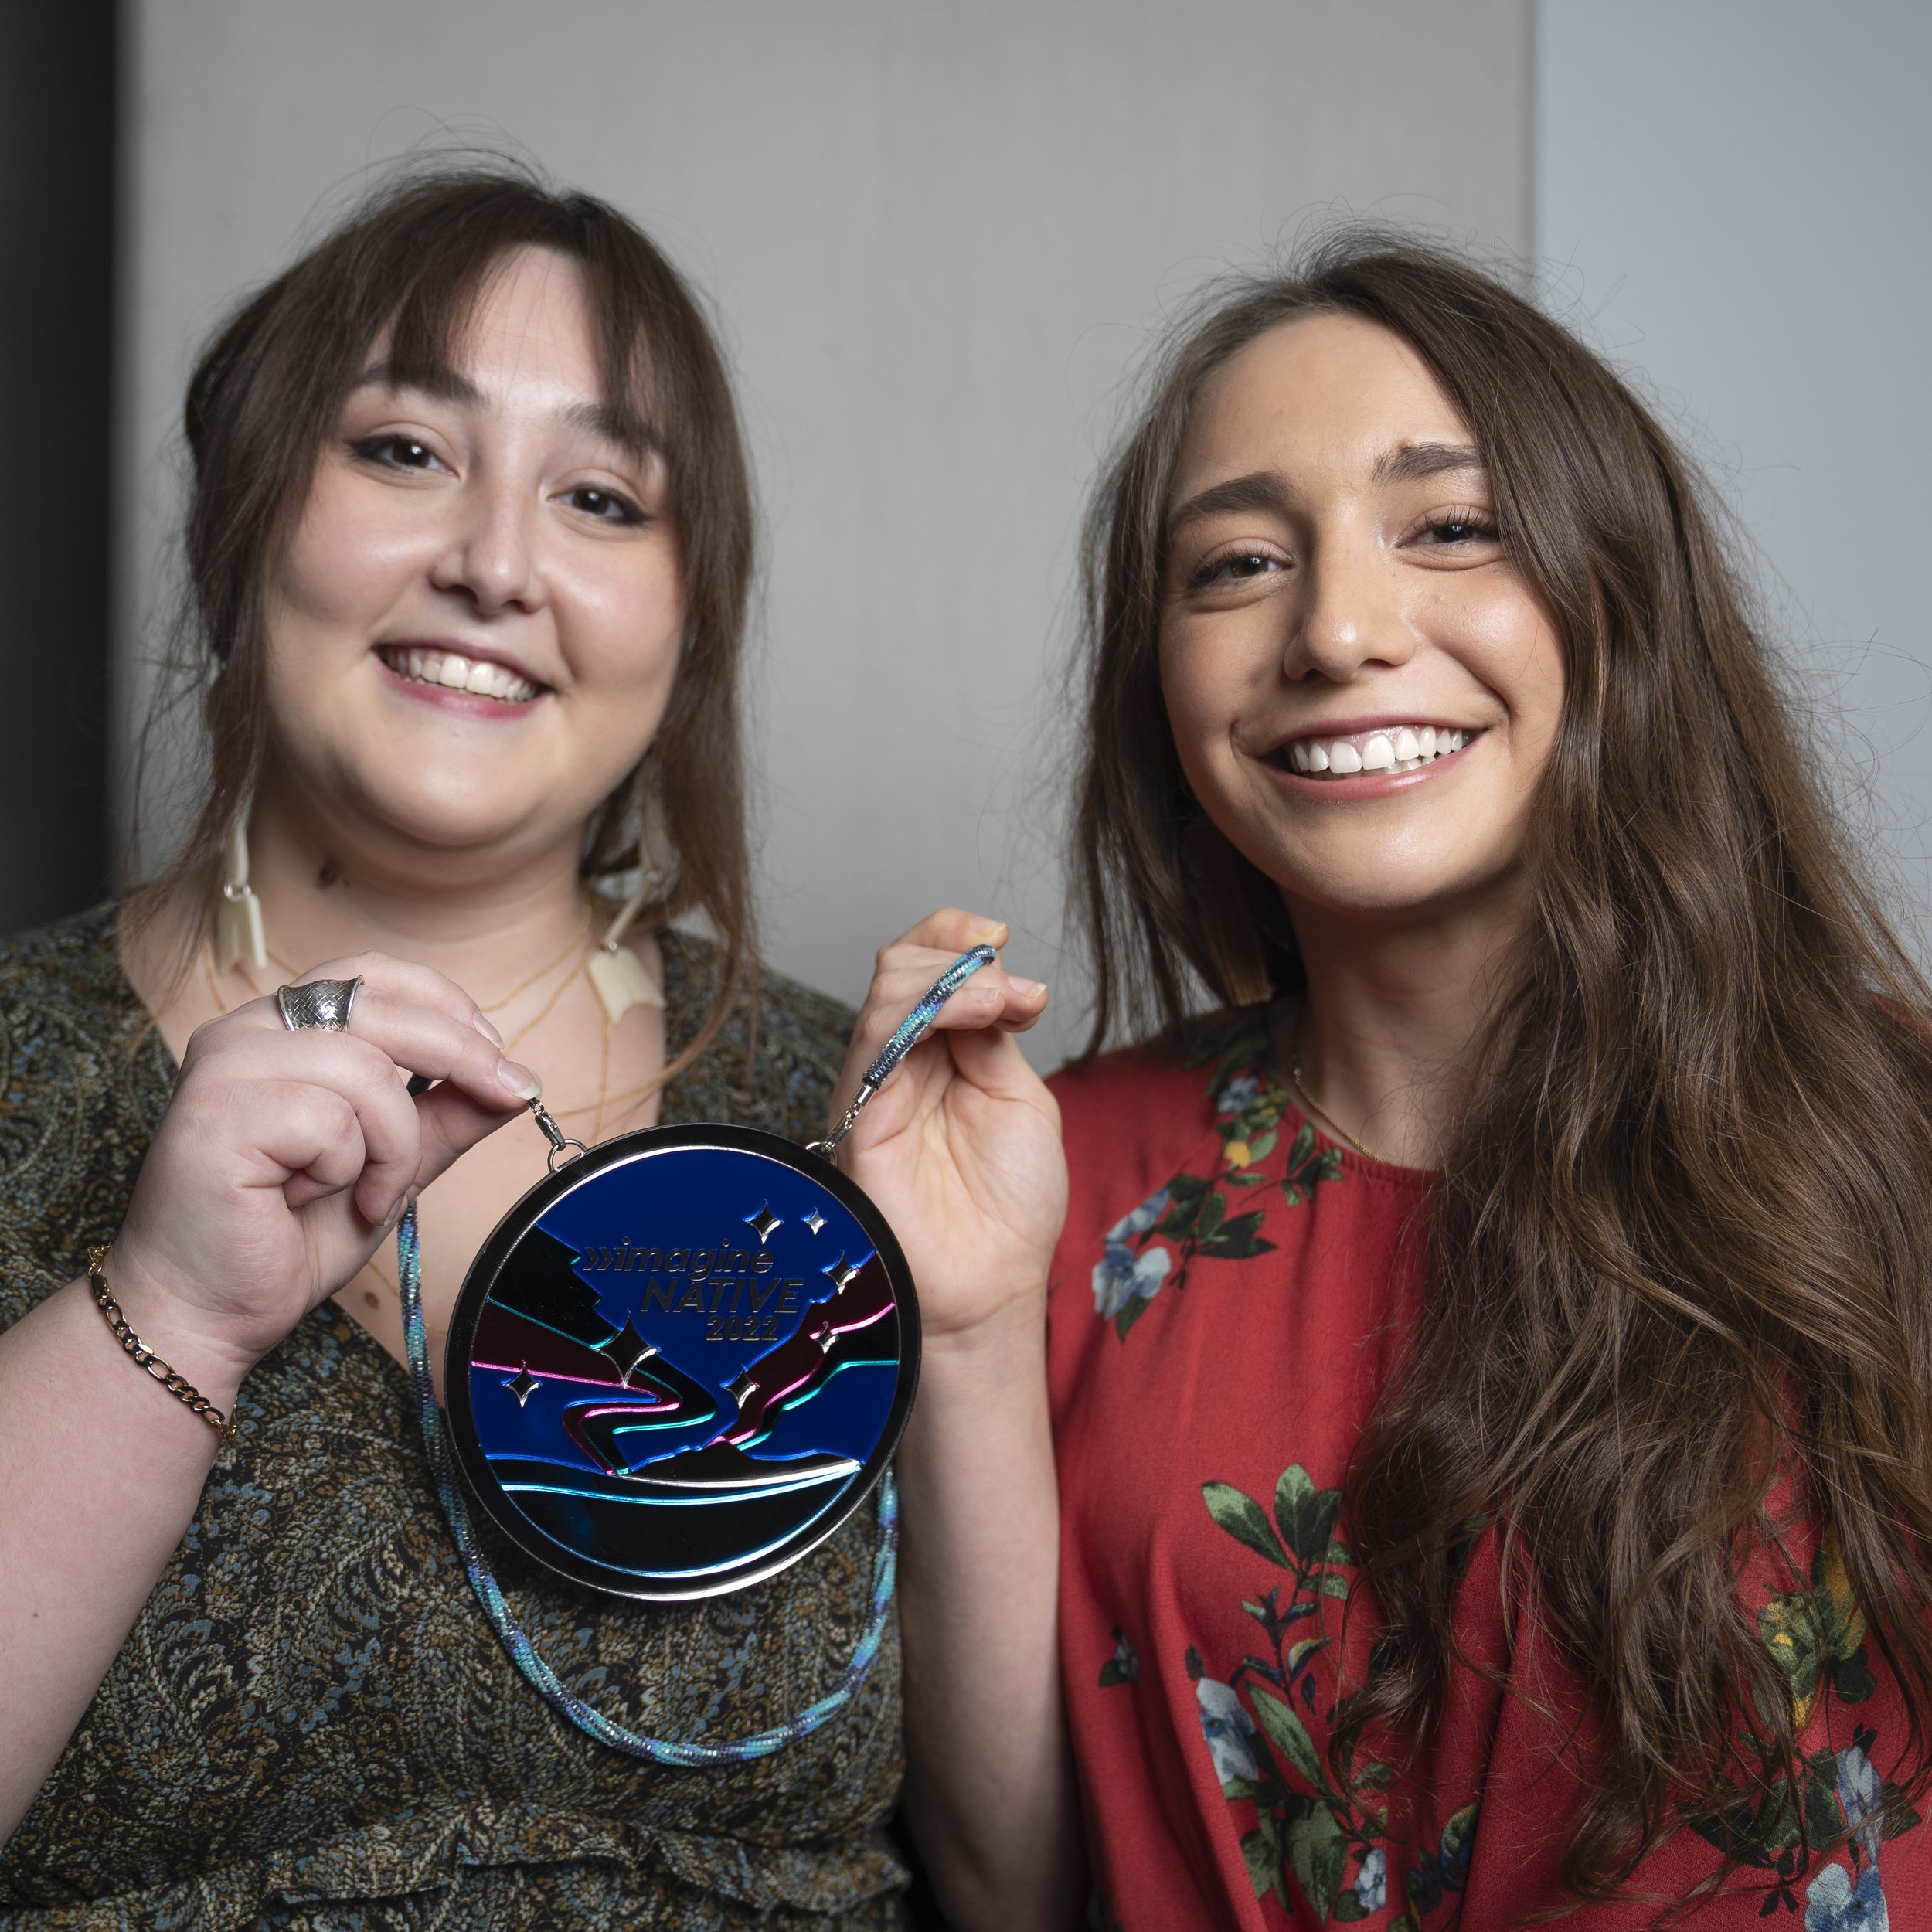 Keara &amp; Caeleigh Lightning, winners of the New Artist in Digital + Interactive Award for their game “Mikiwam.” Image by Danielle Khan Da Silva.